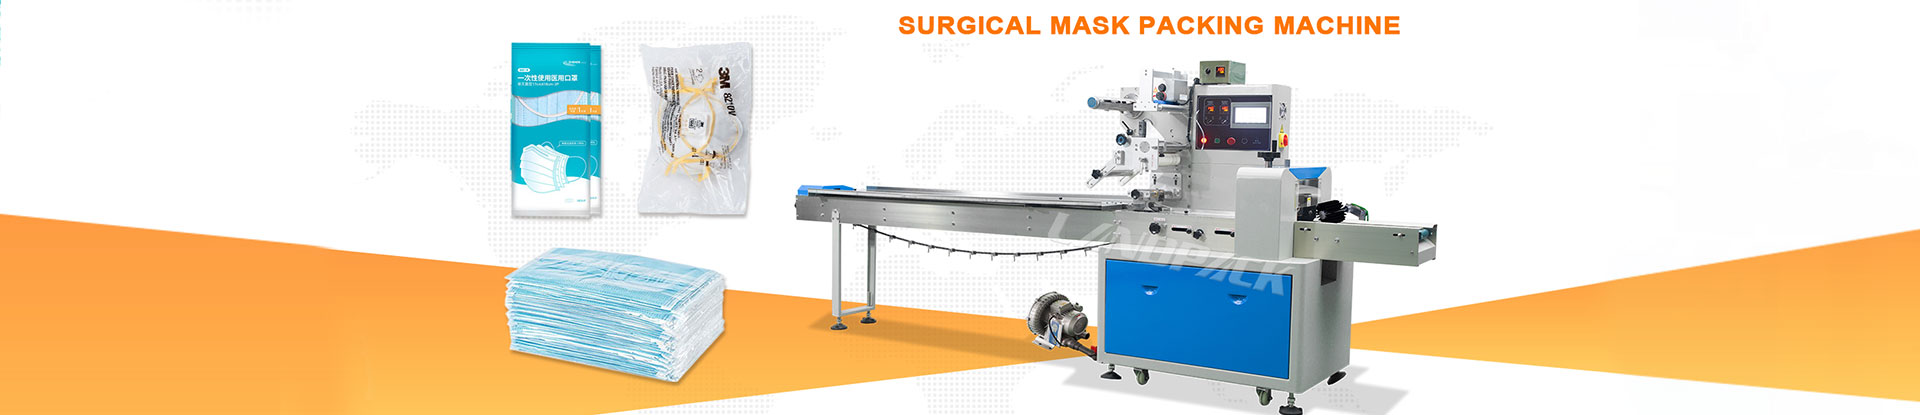 Surgical Masк Packing Machine